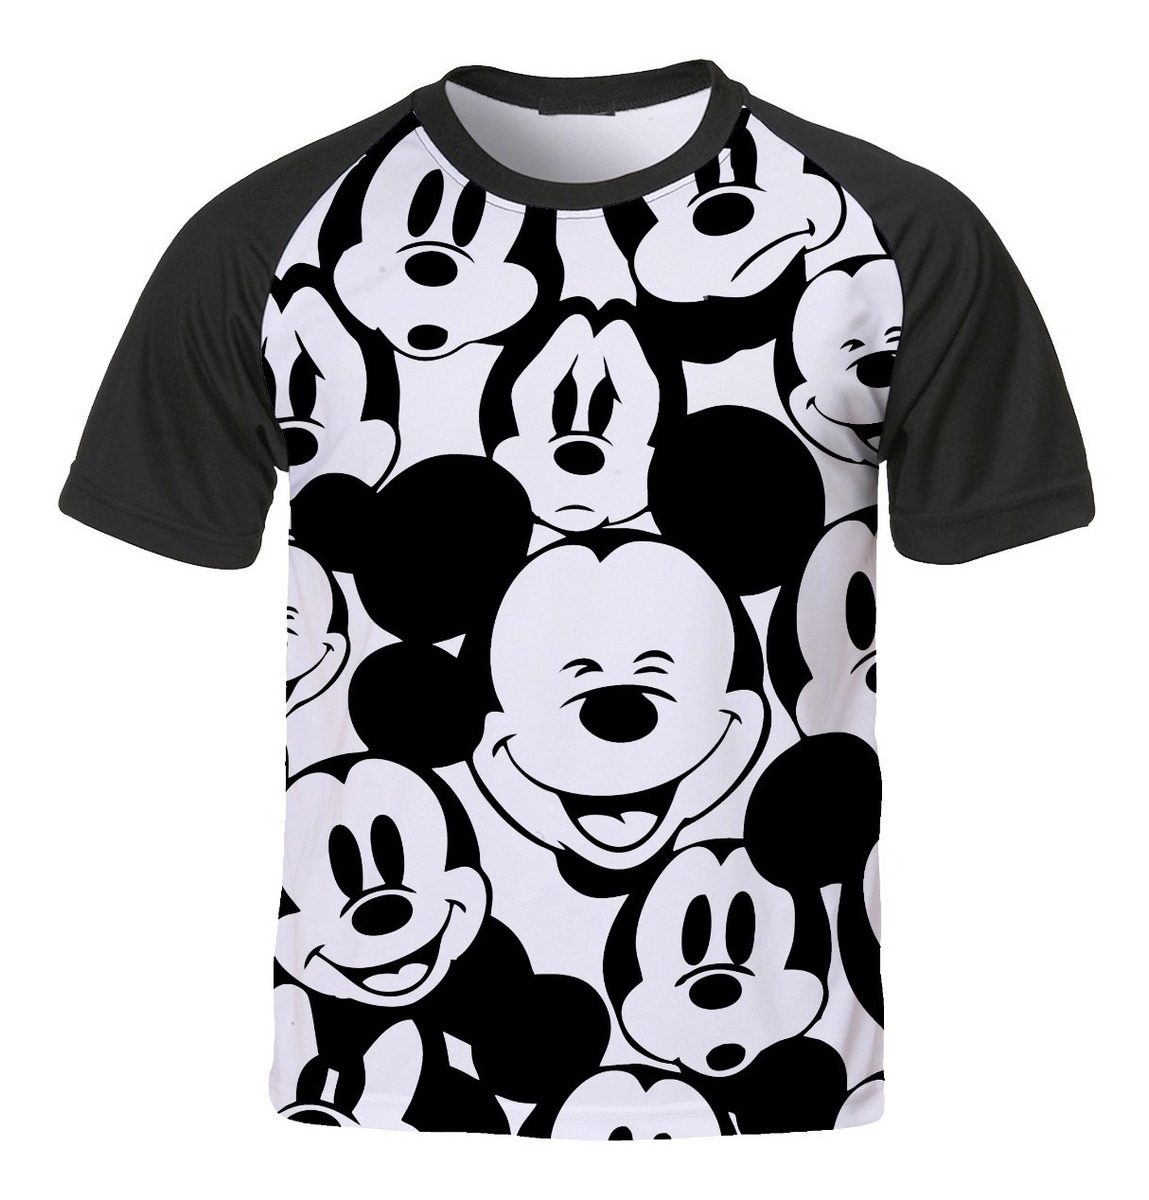 Camiseta Camisa Mickey Mouse Várias Cores - Qad - R$ 53,87 ...